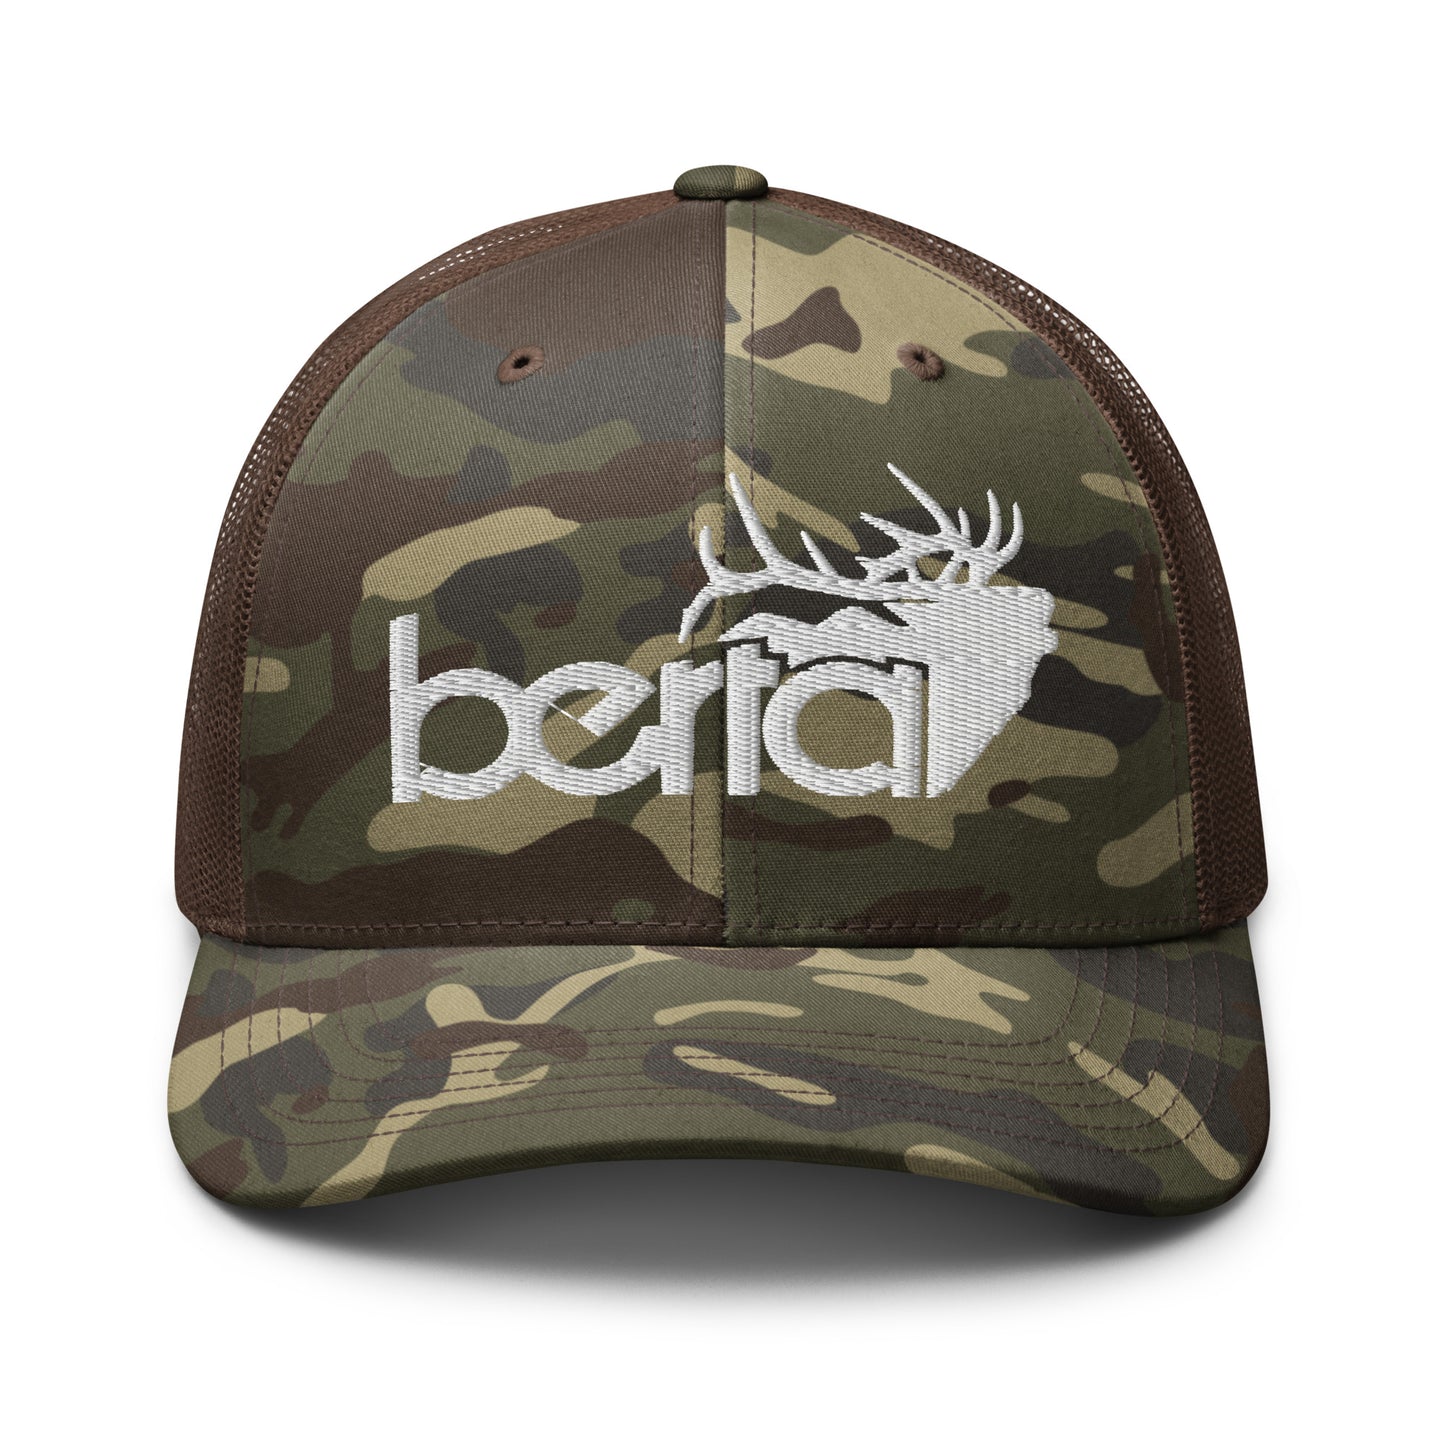 Camouflage BERTA BULL trucker hat